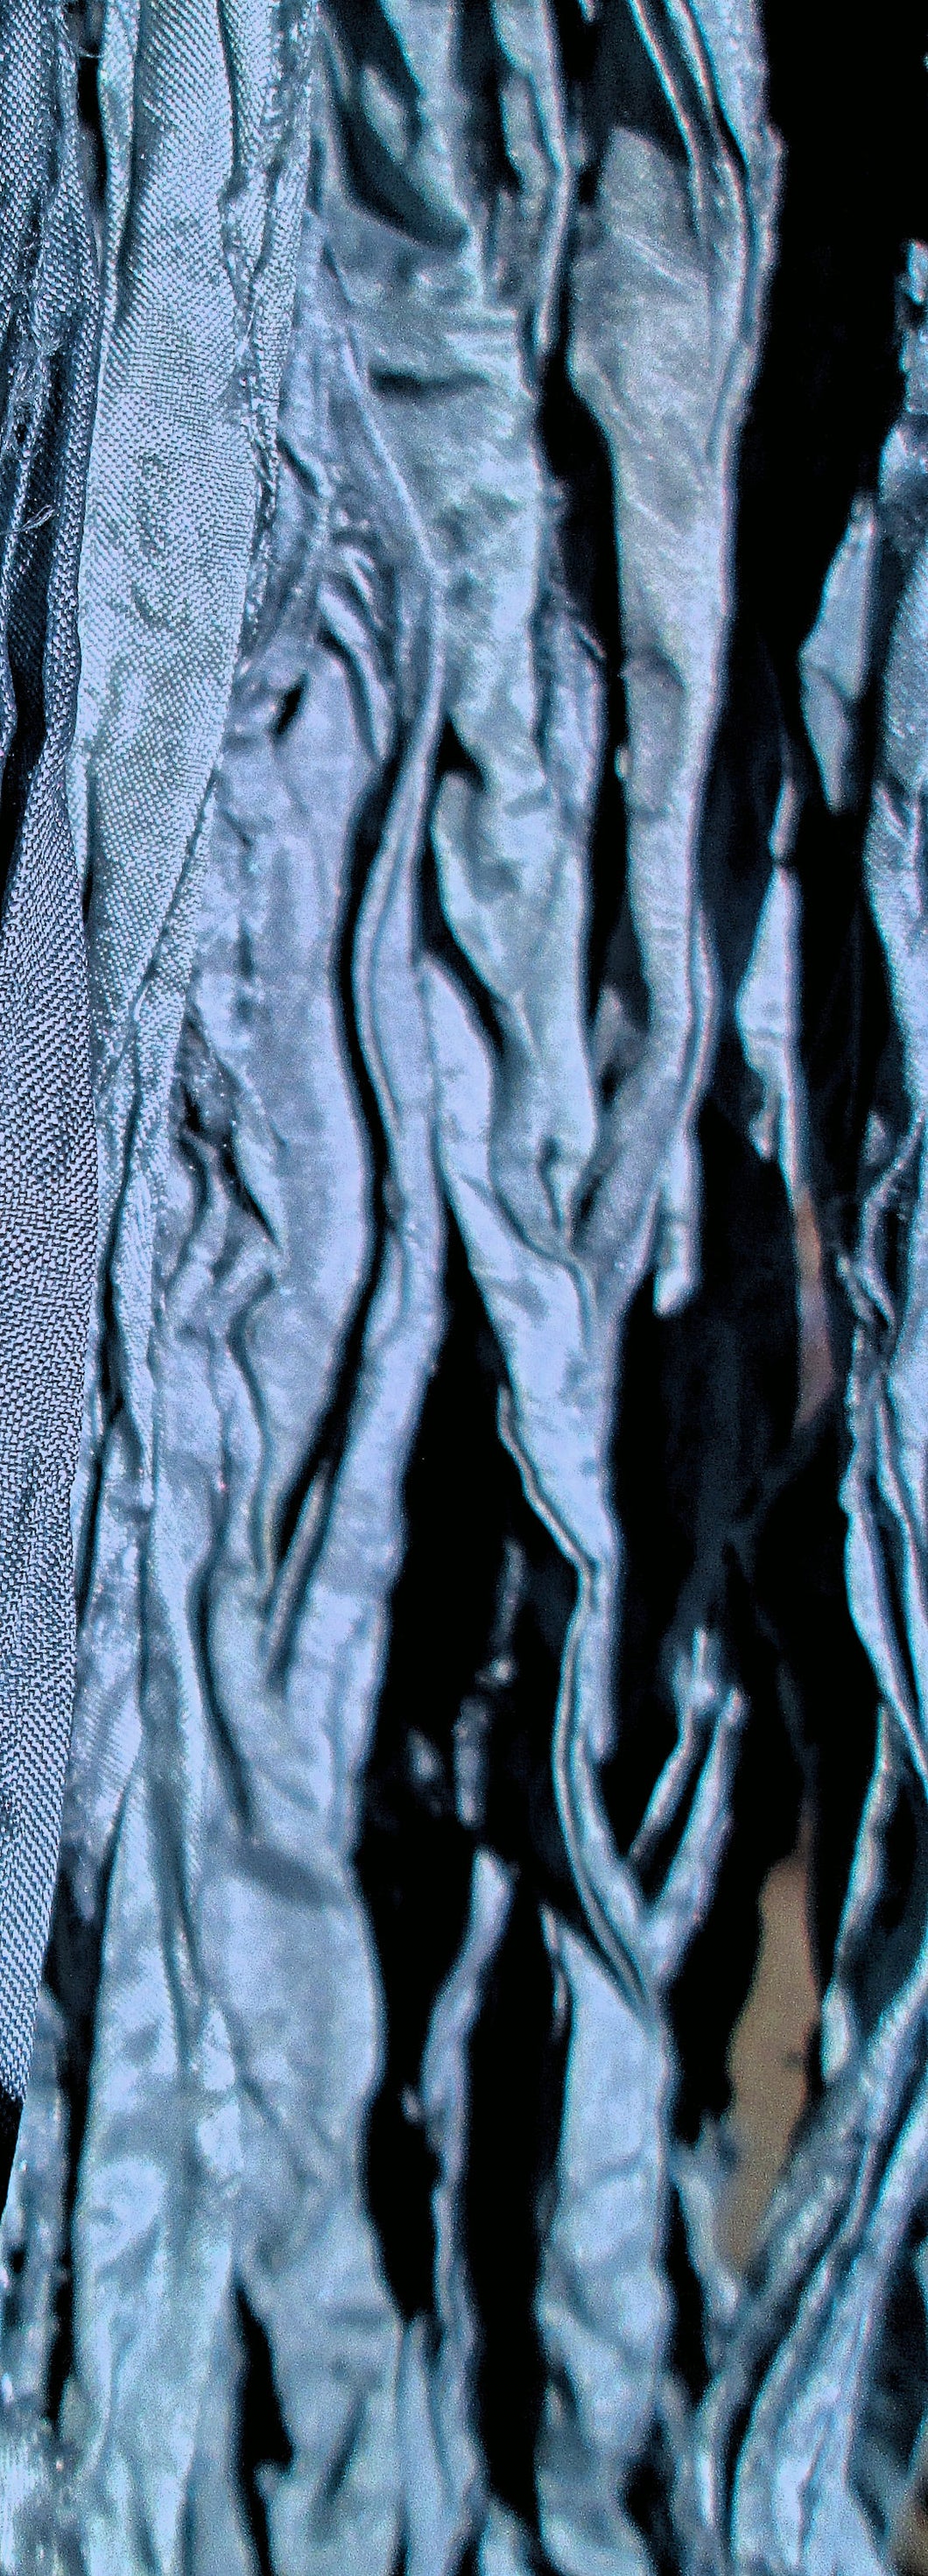 Slate Blue-Gray Recycled Sari Silk Eyelash Ribbon 5 or 10 Yards or Full Skein Jewelry Weaving Spinning Boho & Mixed Media